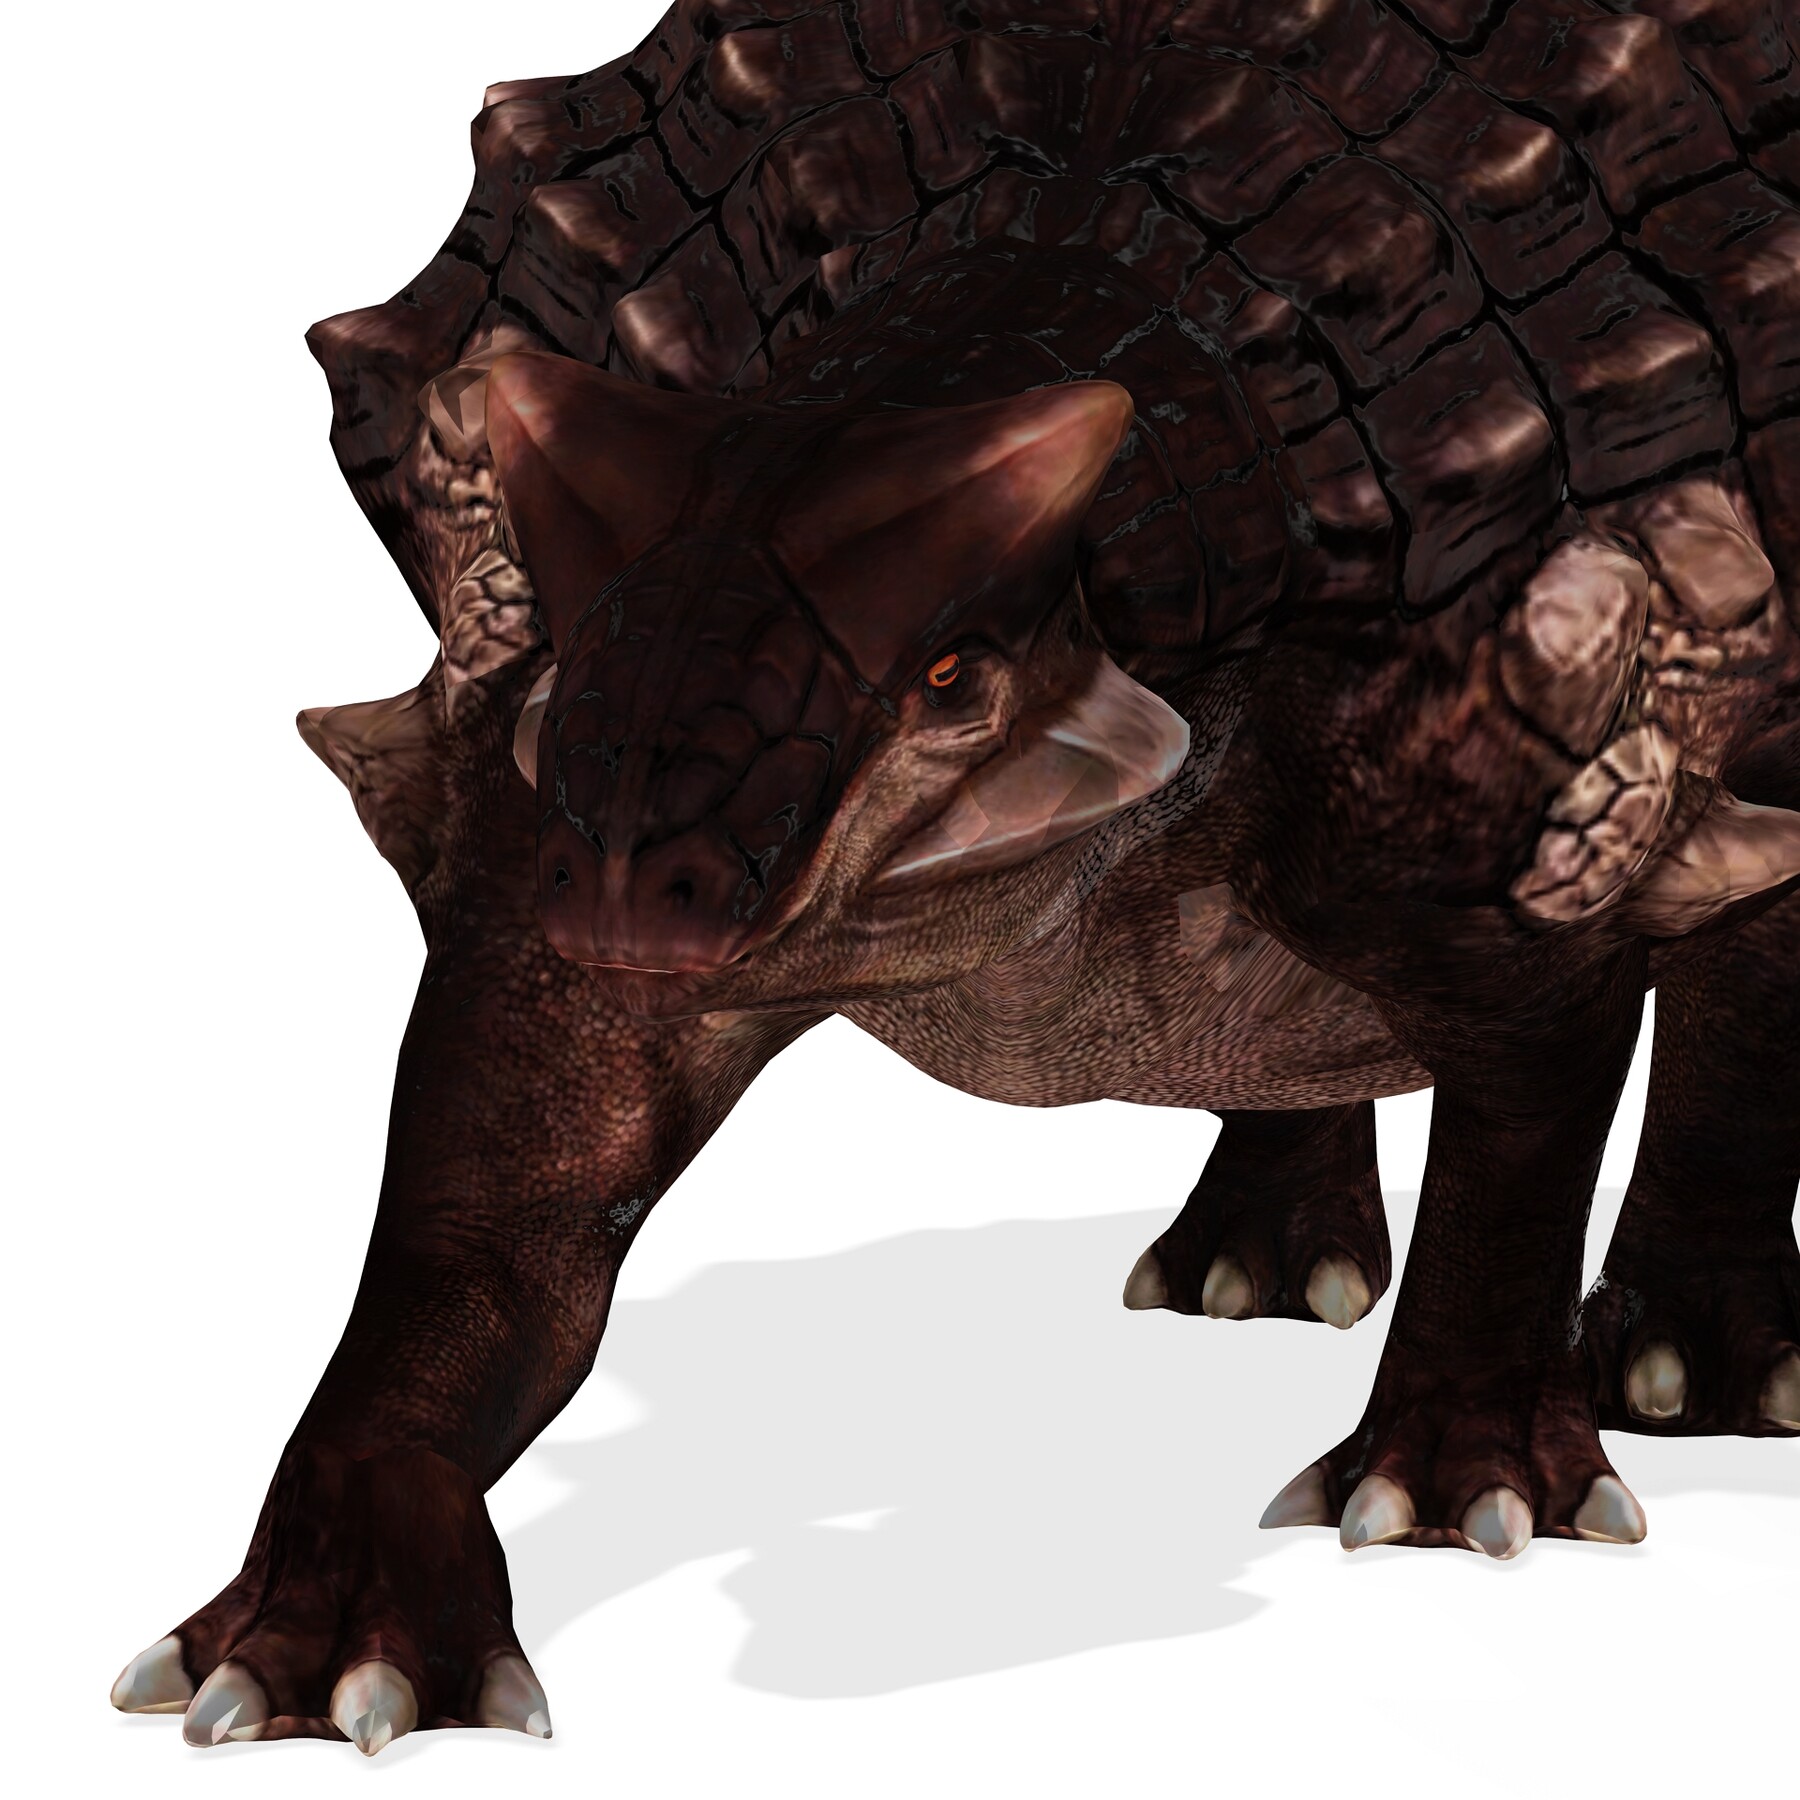 Ankylosaurus Dinosaurs - 3D Model Animated - PixelBoom